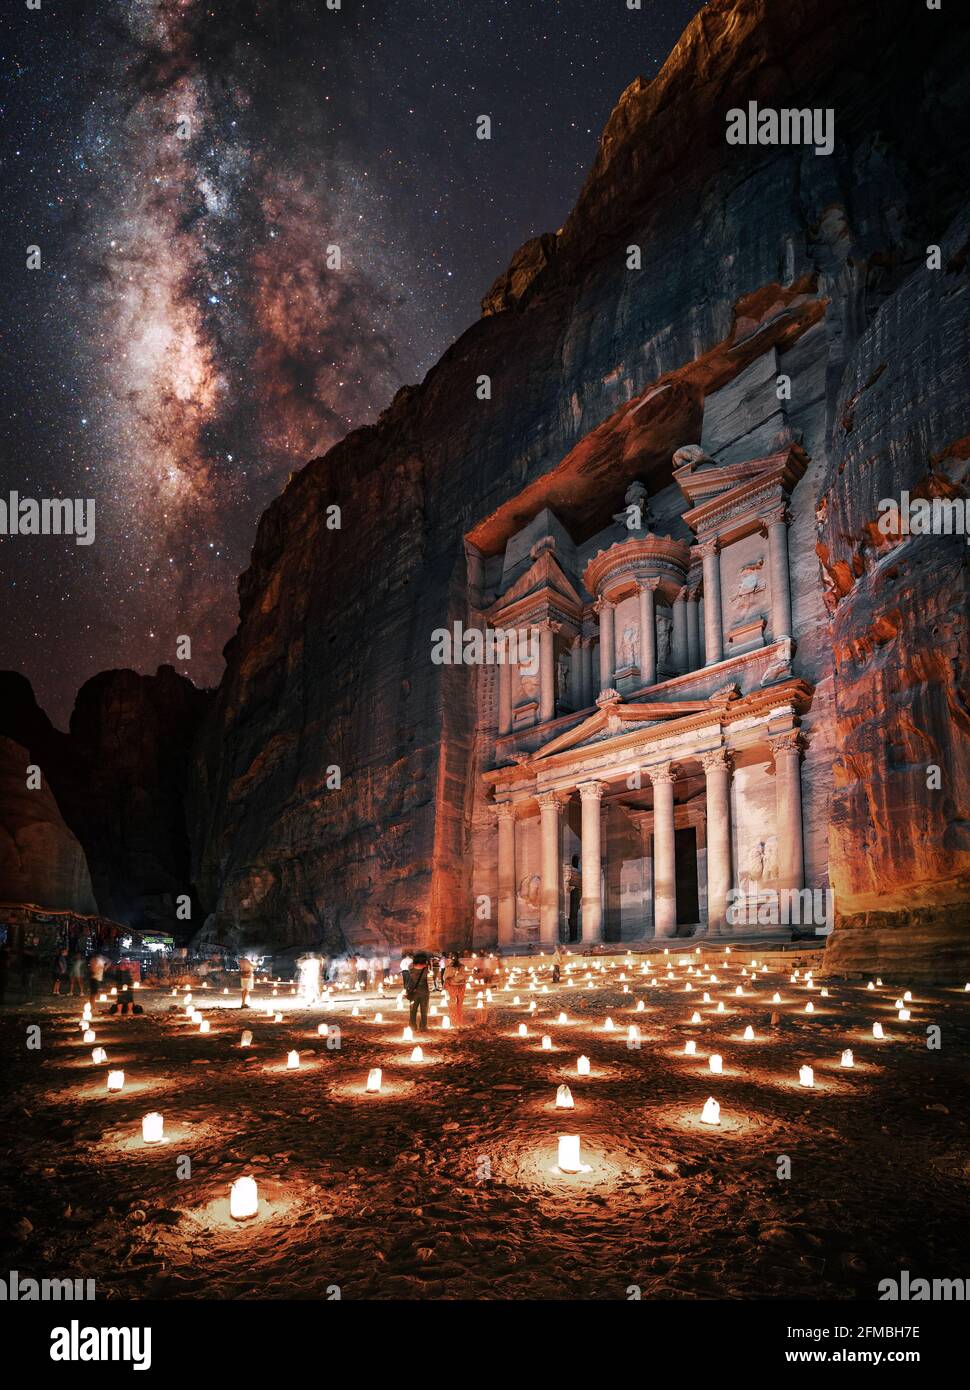 Night shot of the famous treasury of the rock city of Petra in Jordan Stock Photo